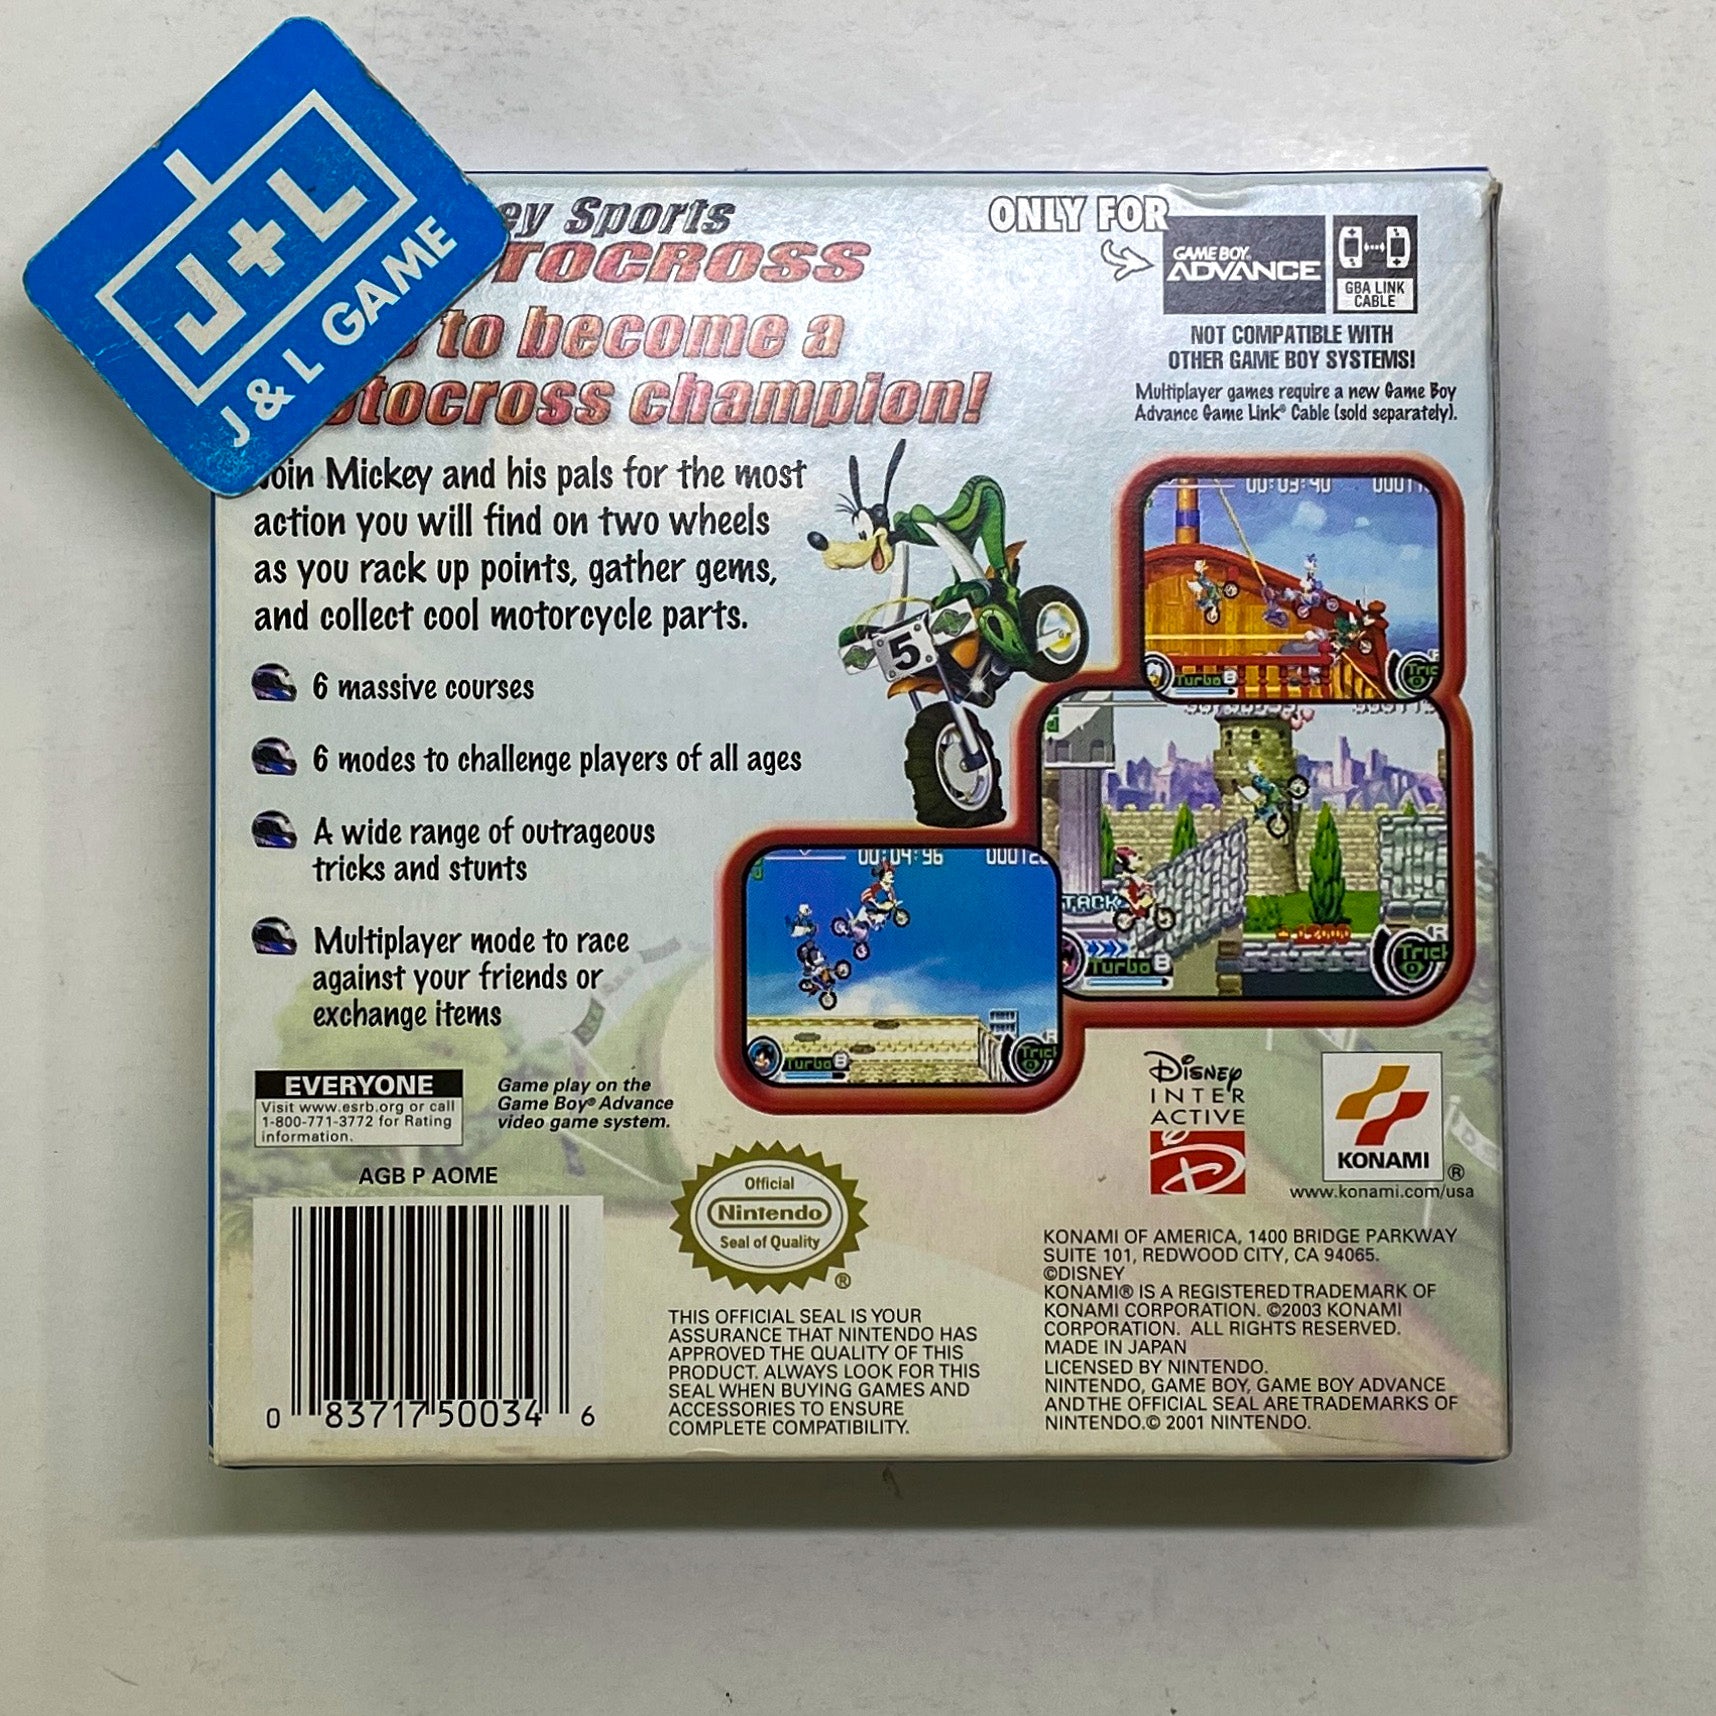 Disney Sports: Motocross - (GBA) Game Boy Advance [Pre-Owned] Video Games Konami   